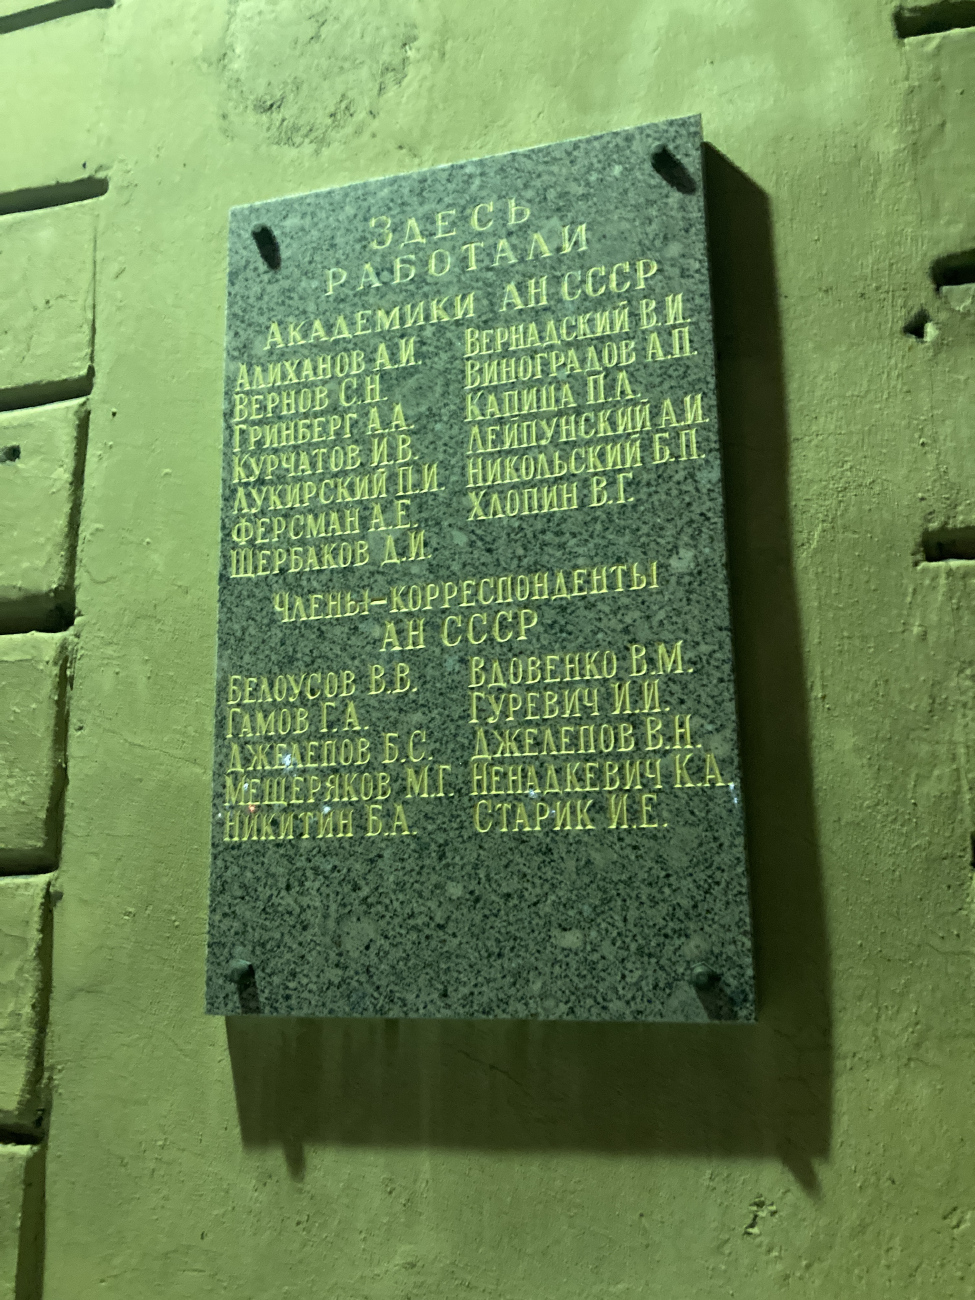 Petersburg, Улица Рентгена, 1. Petersburg — Memorial plaques